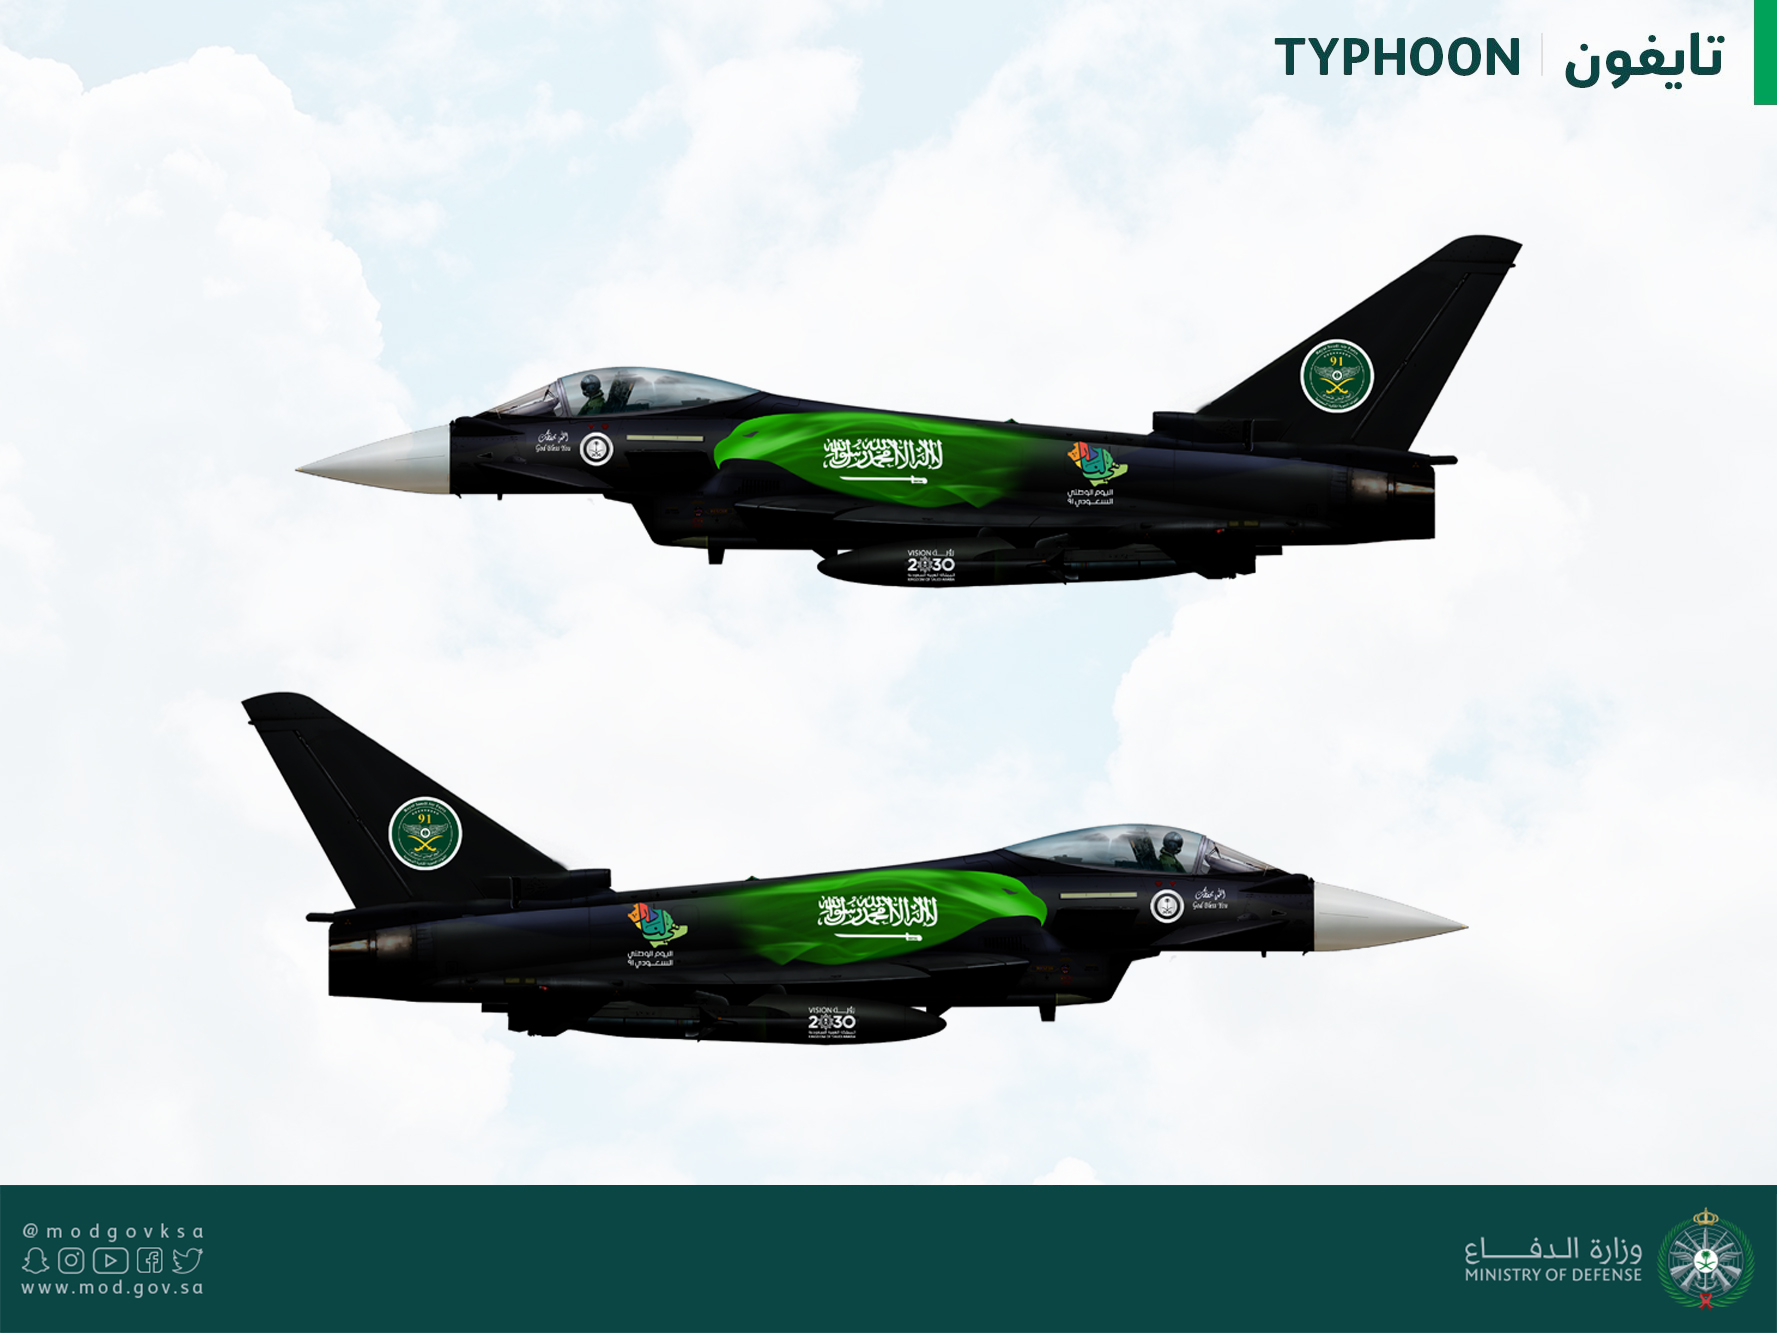 FUERZA AEREA DE ARABIA SAUDITA - Página 2 Saudi_Arabia_RSAF_special_mks_Typhoon_small